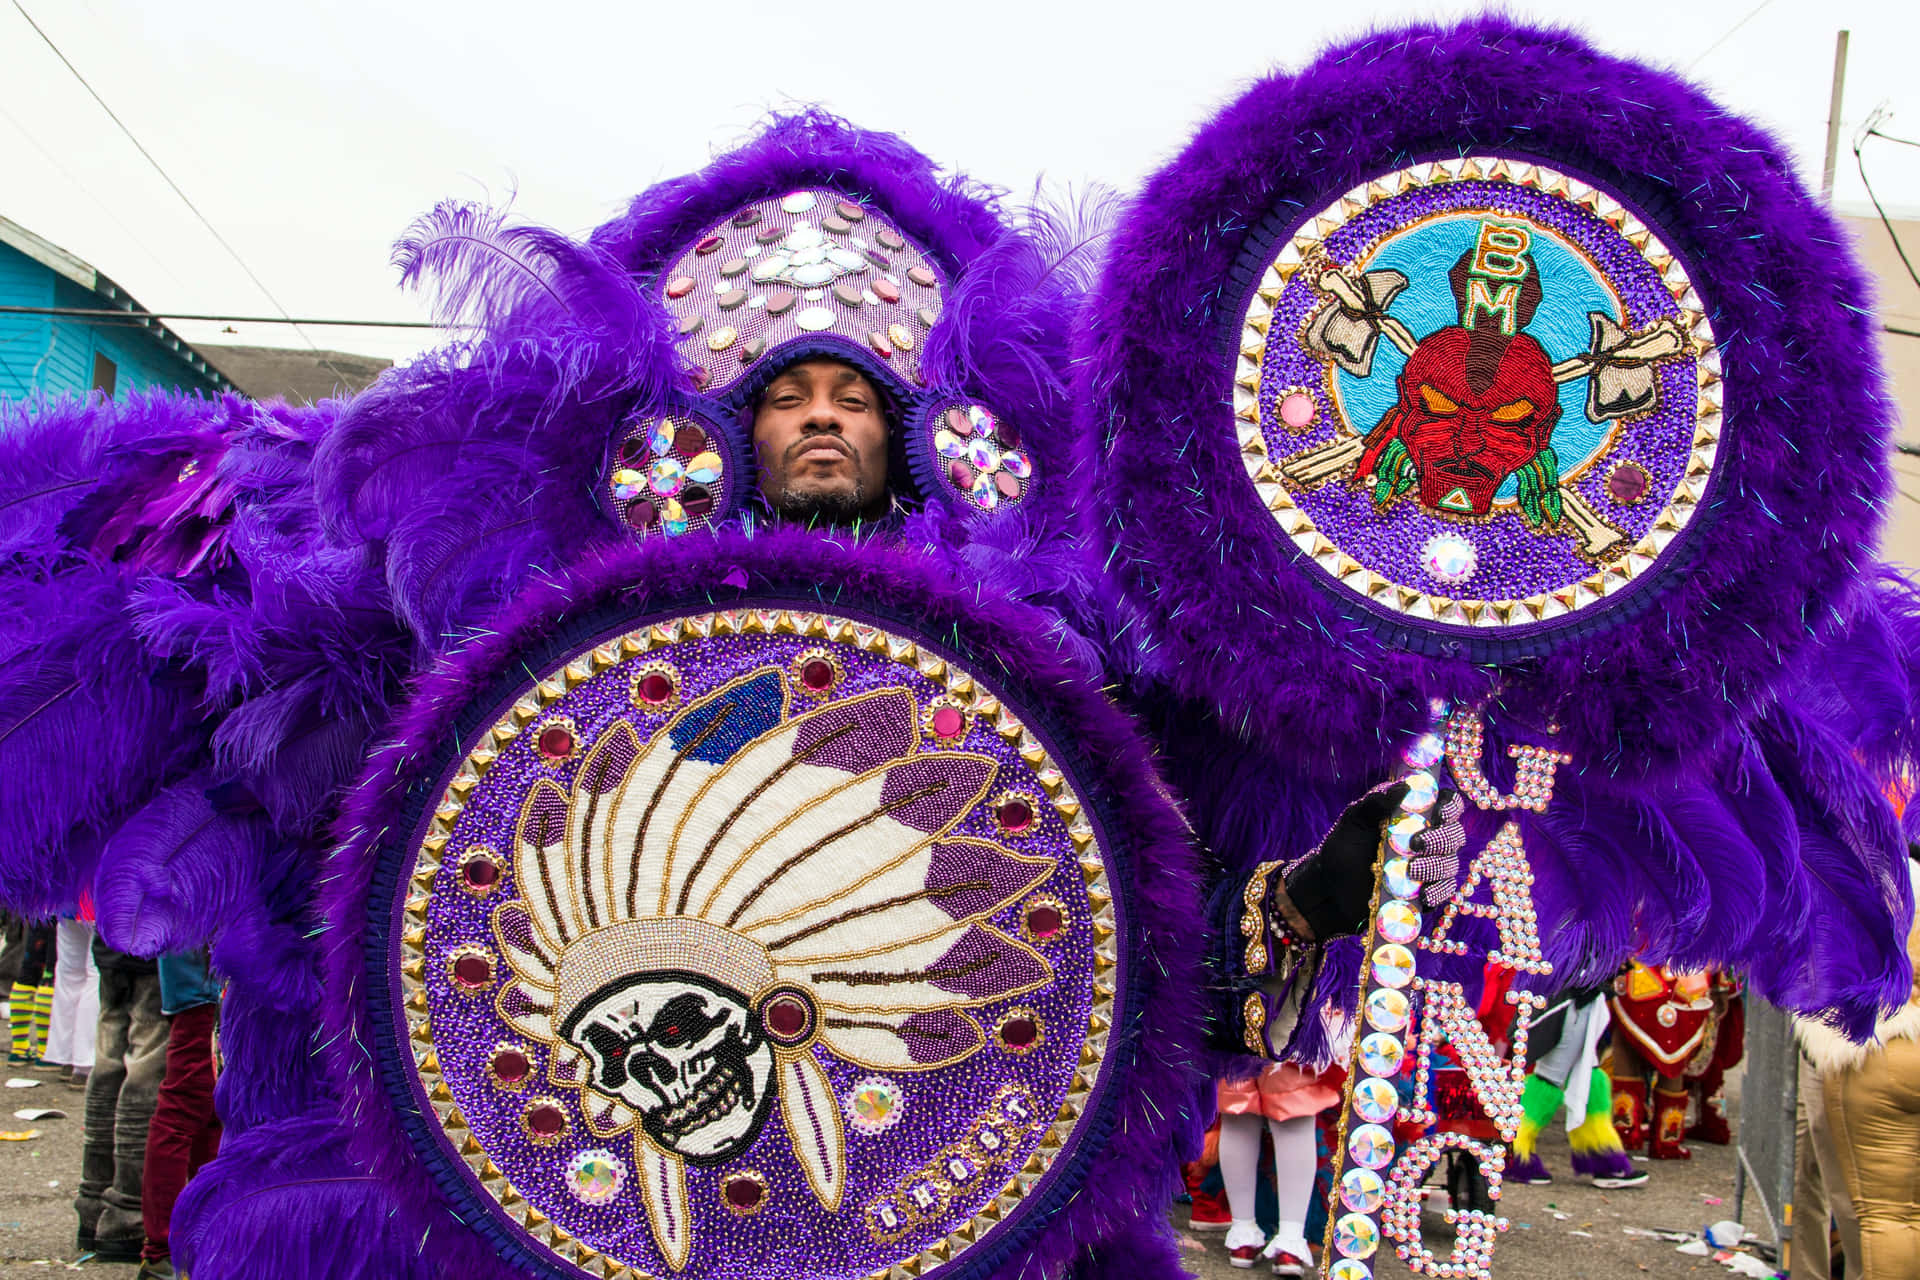 Feierndenehmen Am Mardi Gras Fest In New Orleans Teil